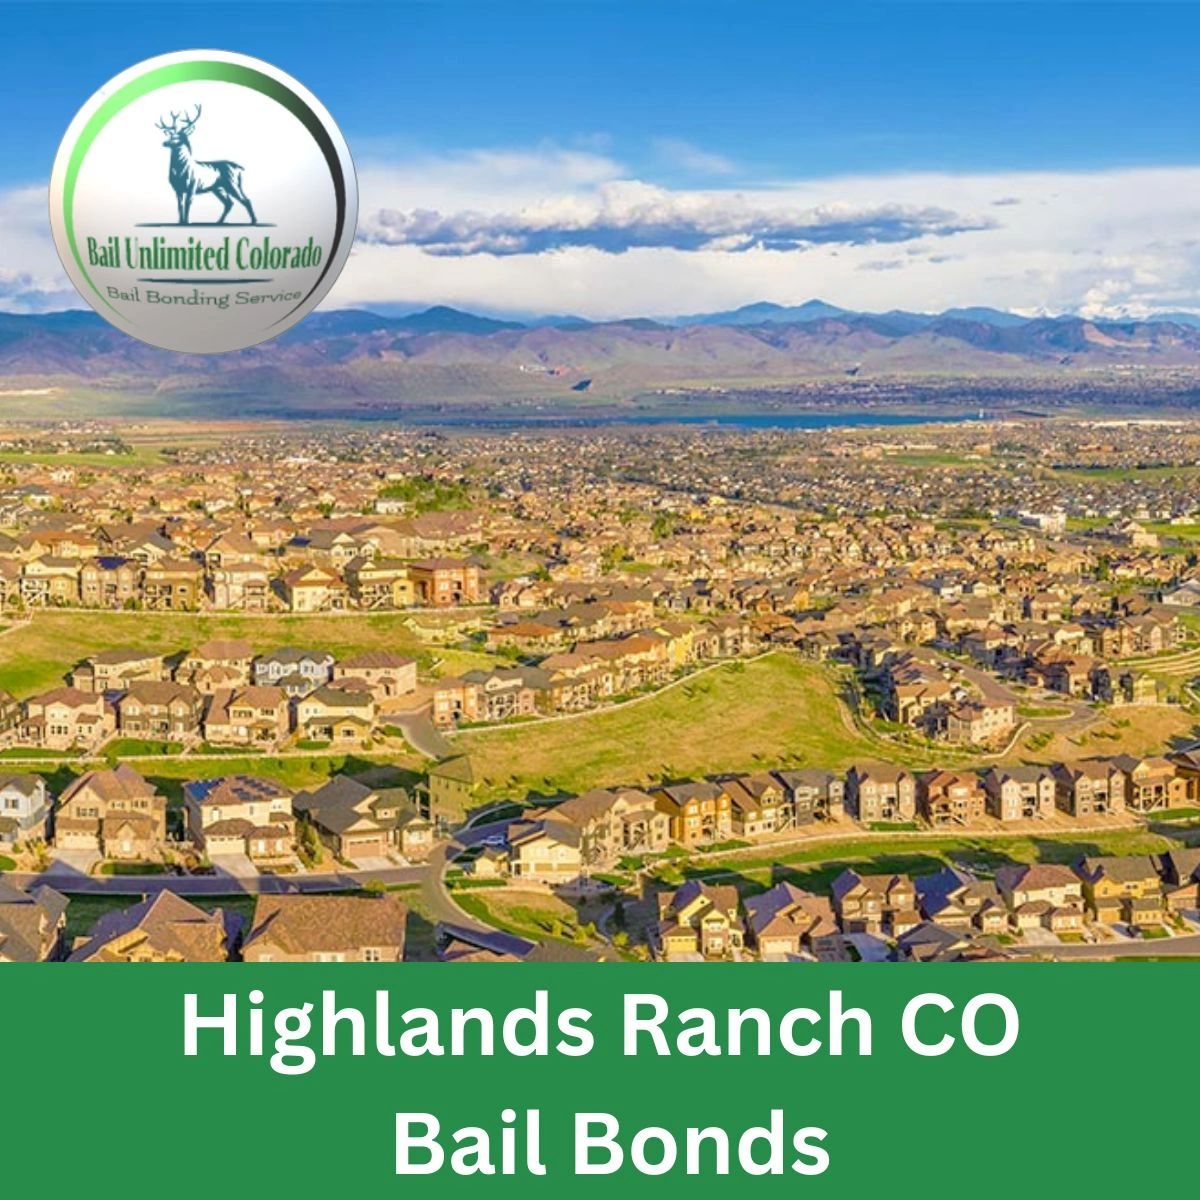 Highlands Ranch CO Bail Bonds IMAGE Highlands Ranch Neighborhood Houses LOGO Bail Unlimited Colorado